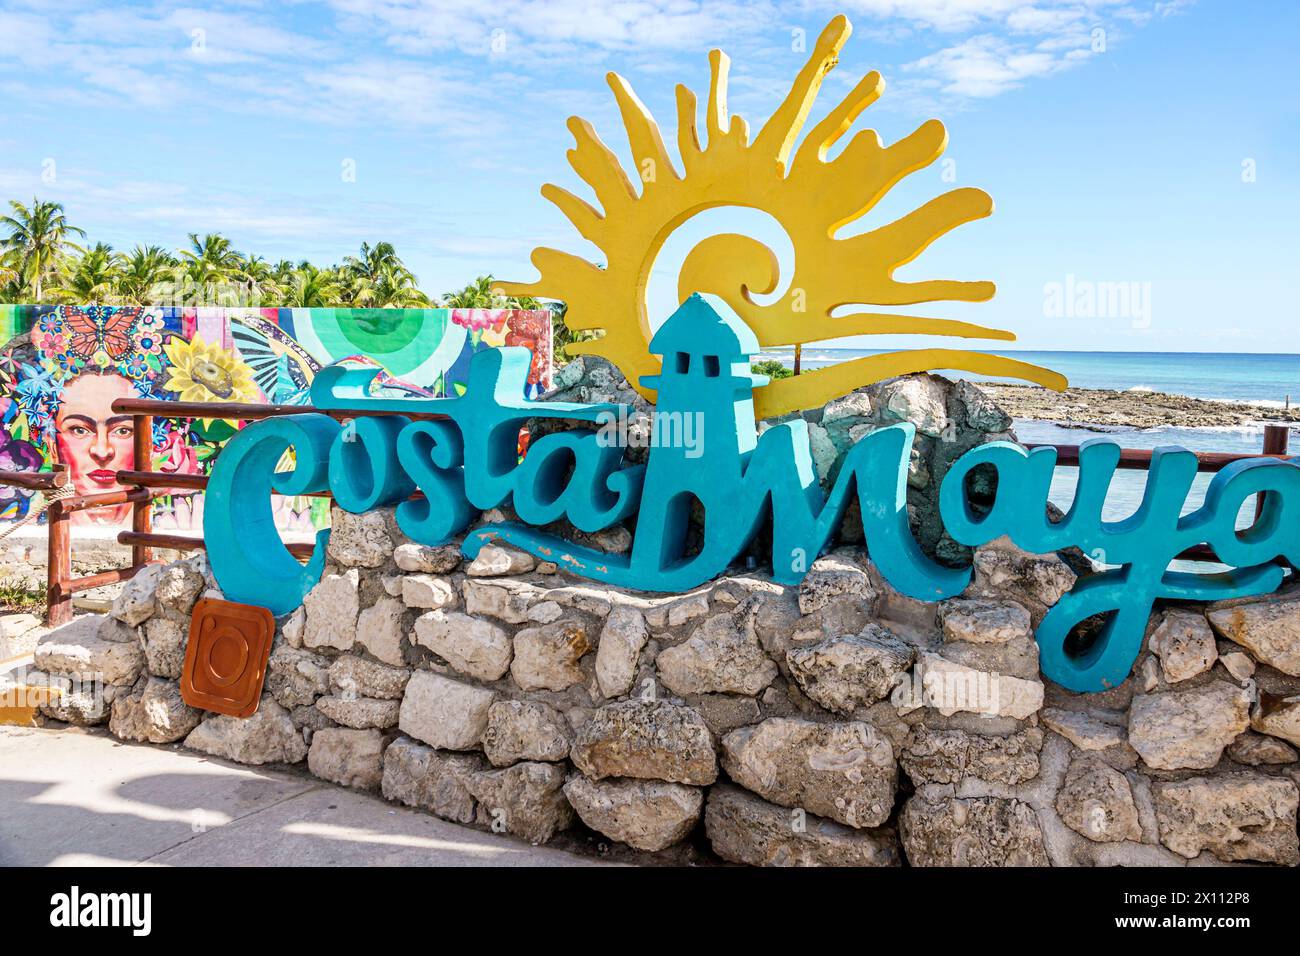 Costa Maya Beach Mexico,Cruise Port,Norwegian Joy Cruise Line ship,7-day Caribbean Sea itinerary,giant sign,photo opportunity,visitors visiting travel Stock Photo